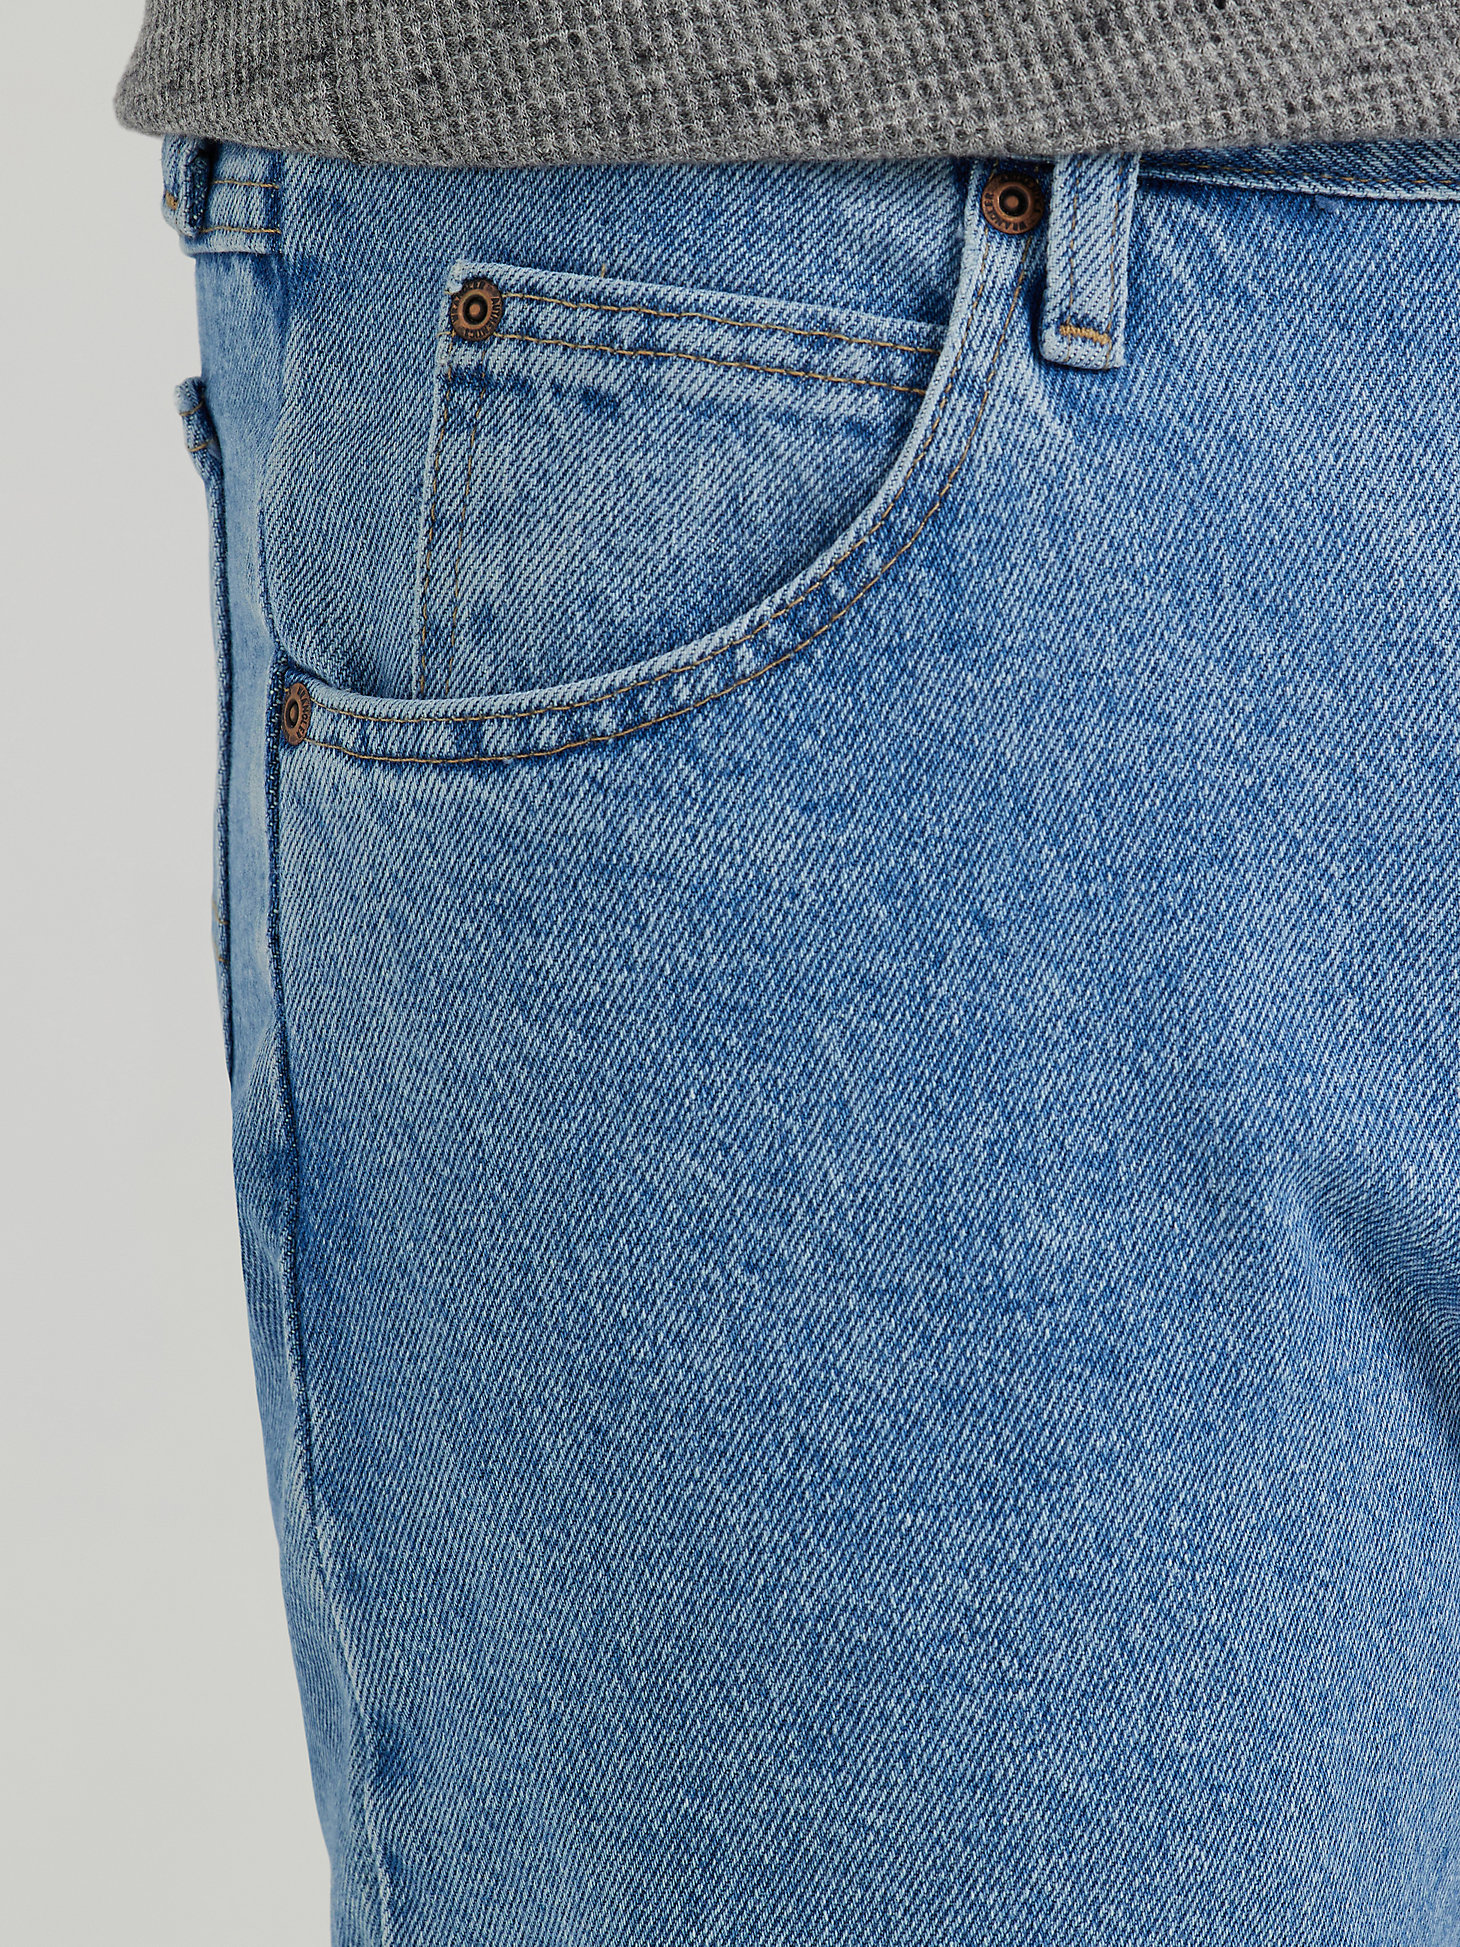 Men's Wrangler Authentics® Regular Fit Cotton Jean in Light Stonewash